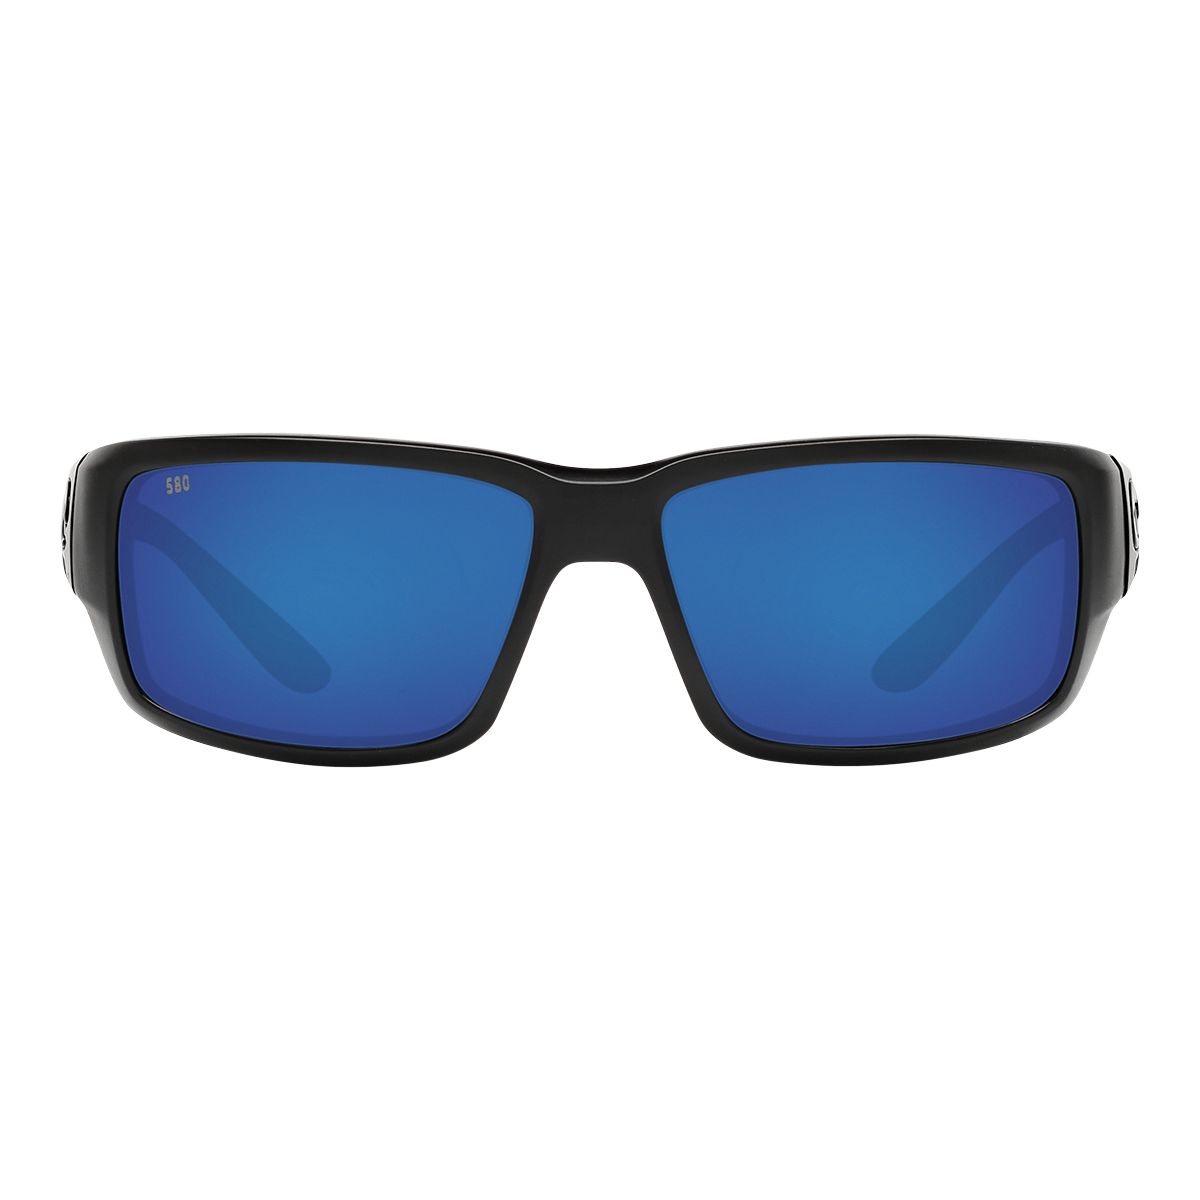 Image of Costa Fantail Sunglasses